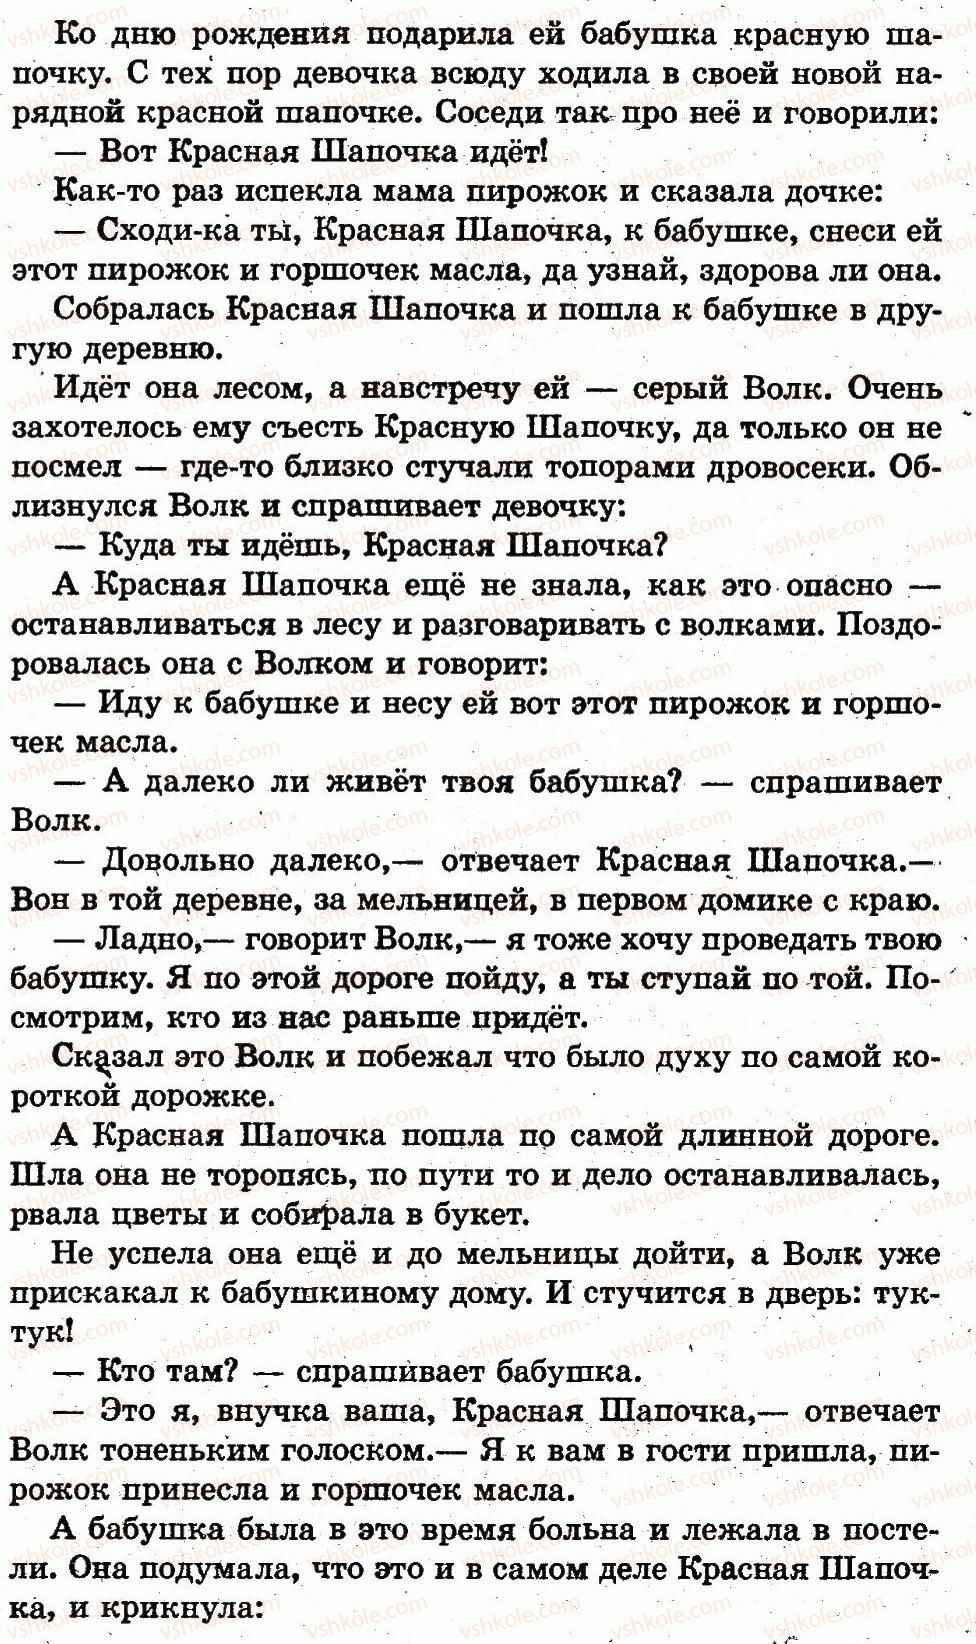 1-russkij-yazyk-in-lapshina-nn-zorka-2012--chelovek-страница114-rnd4425.jpg